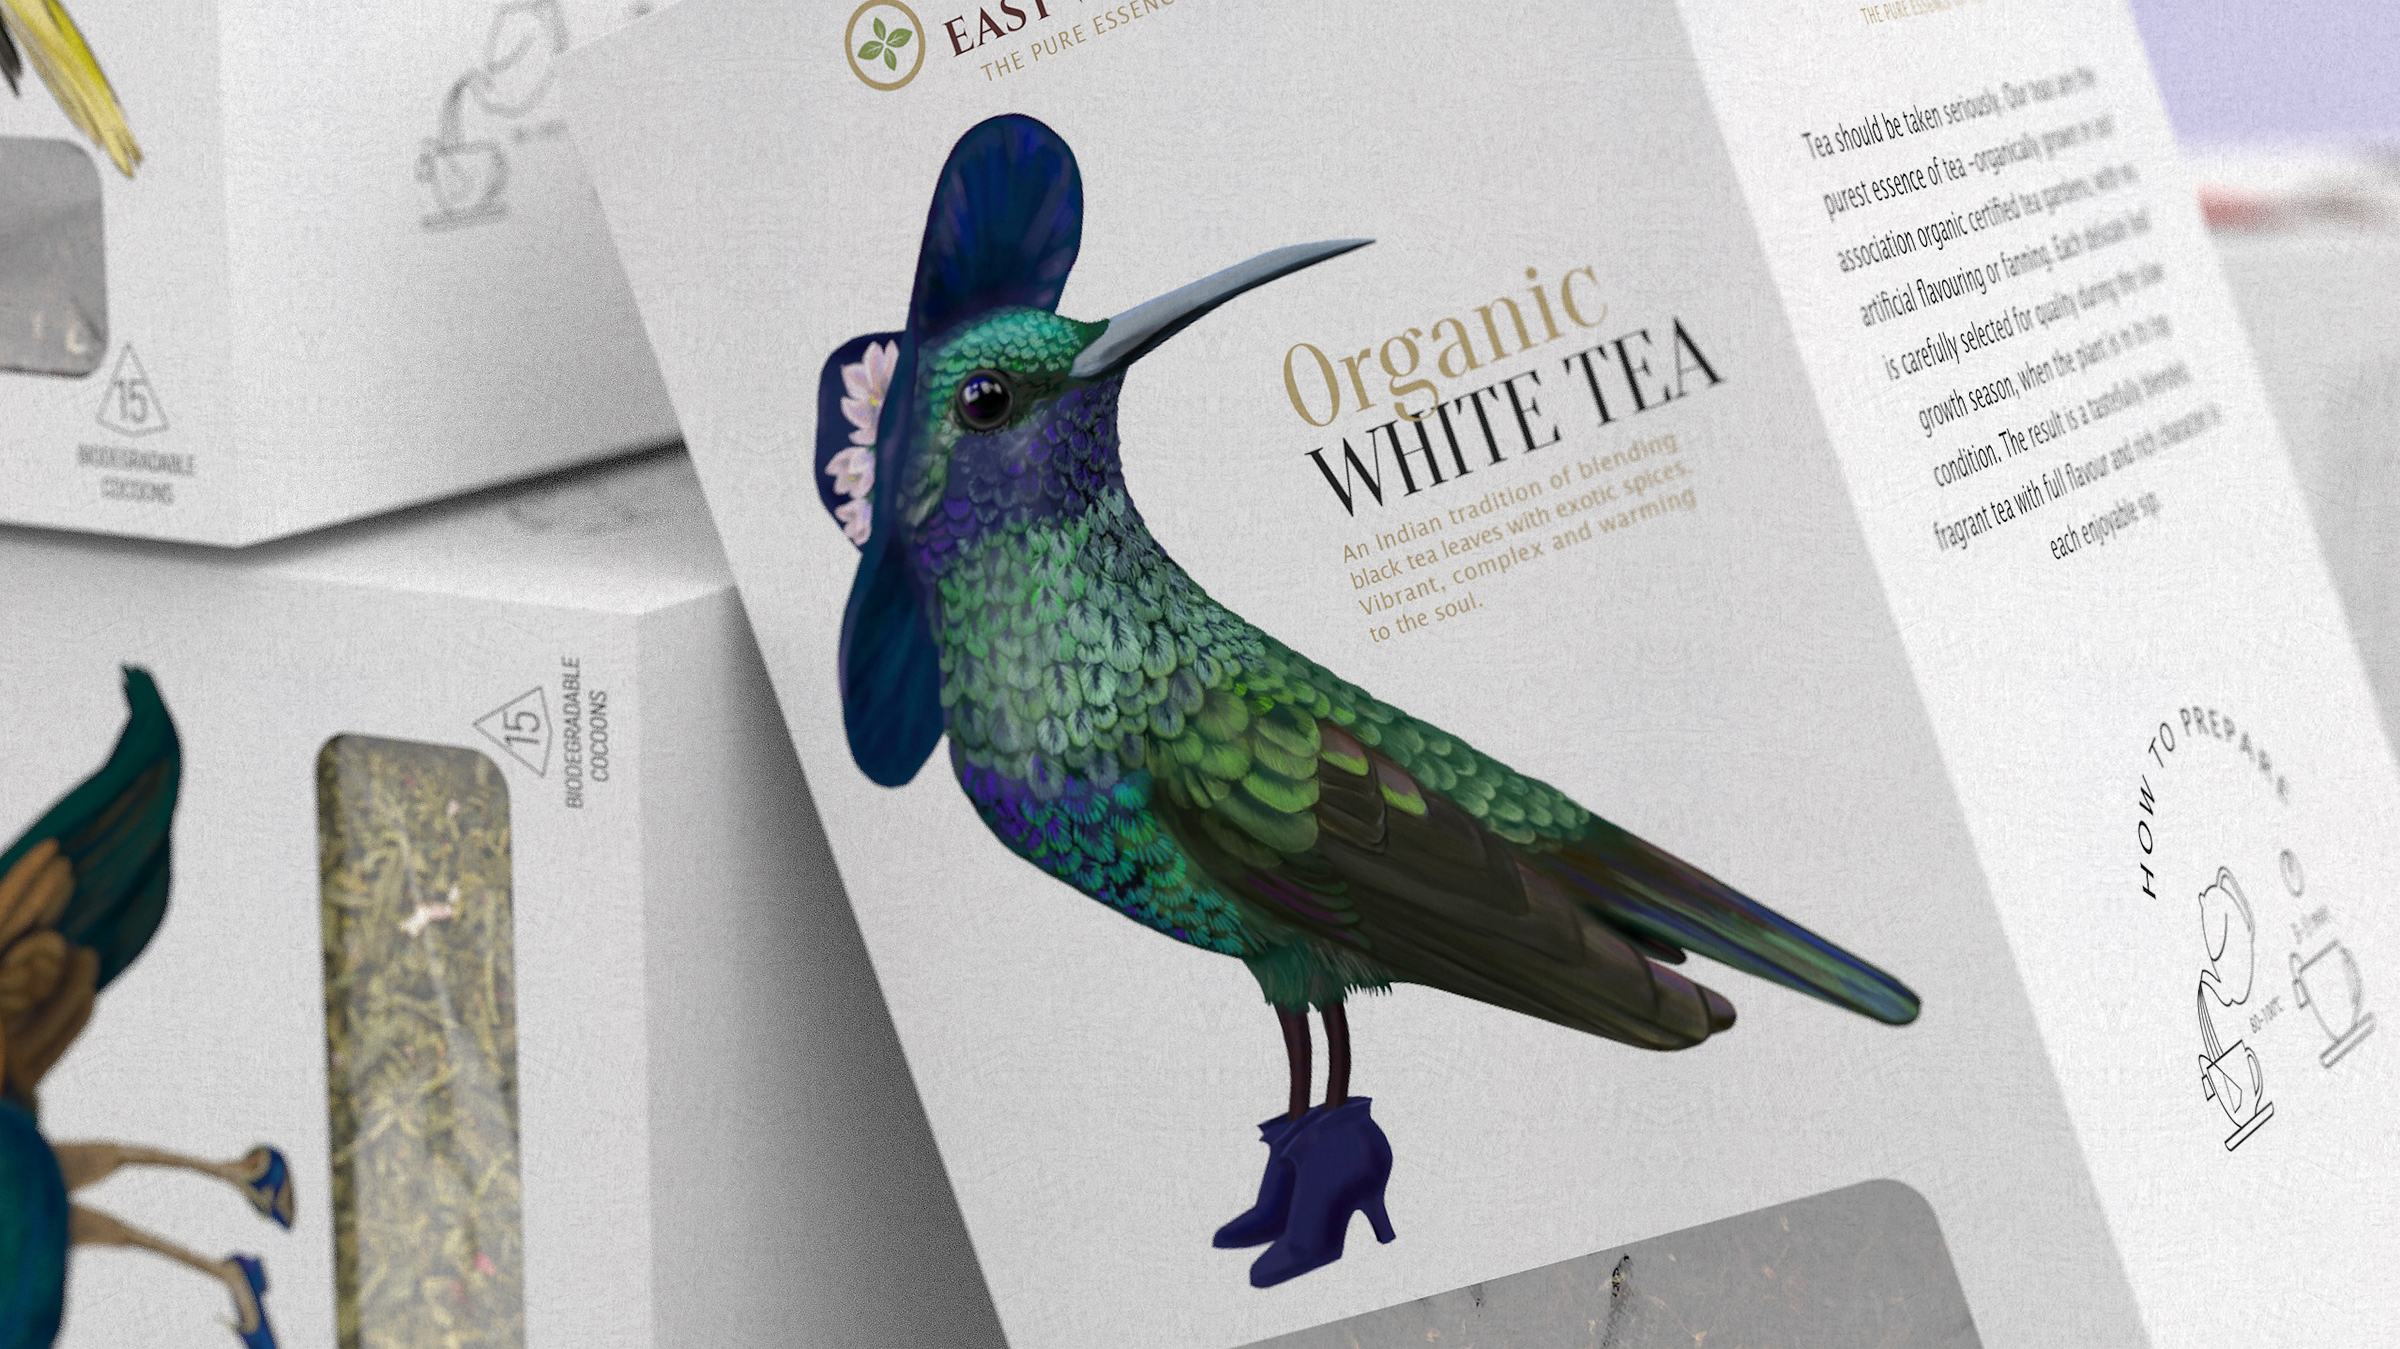 Charming Illustrative Birds on Organic Tea Range Packaging